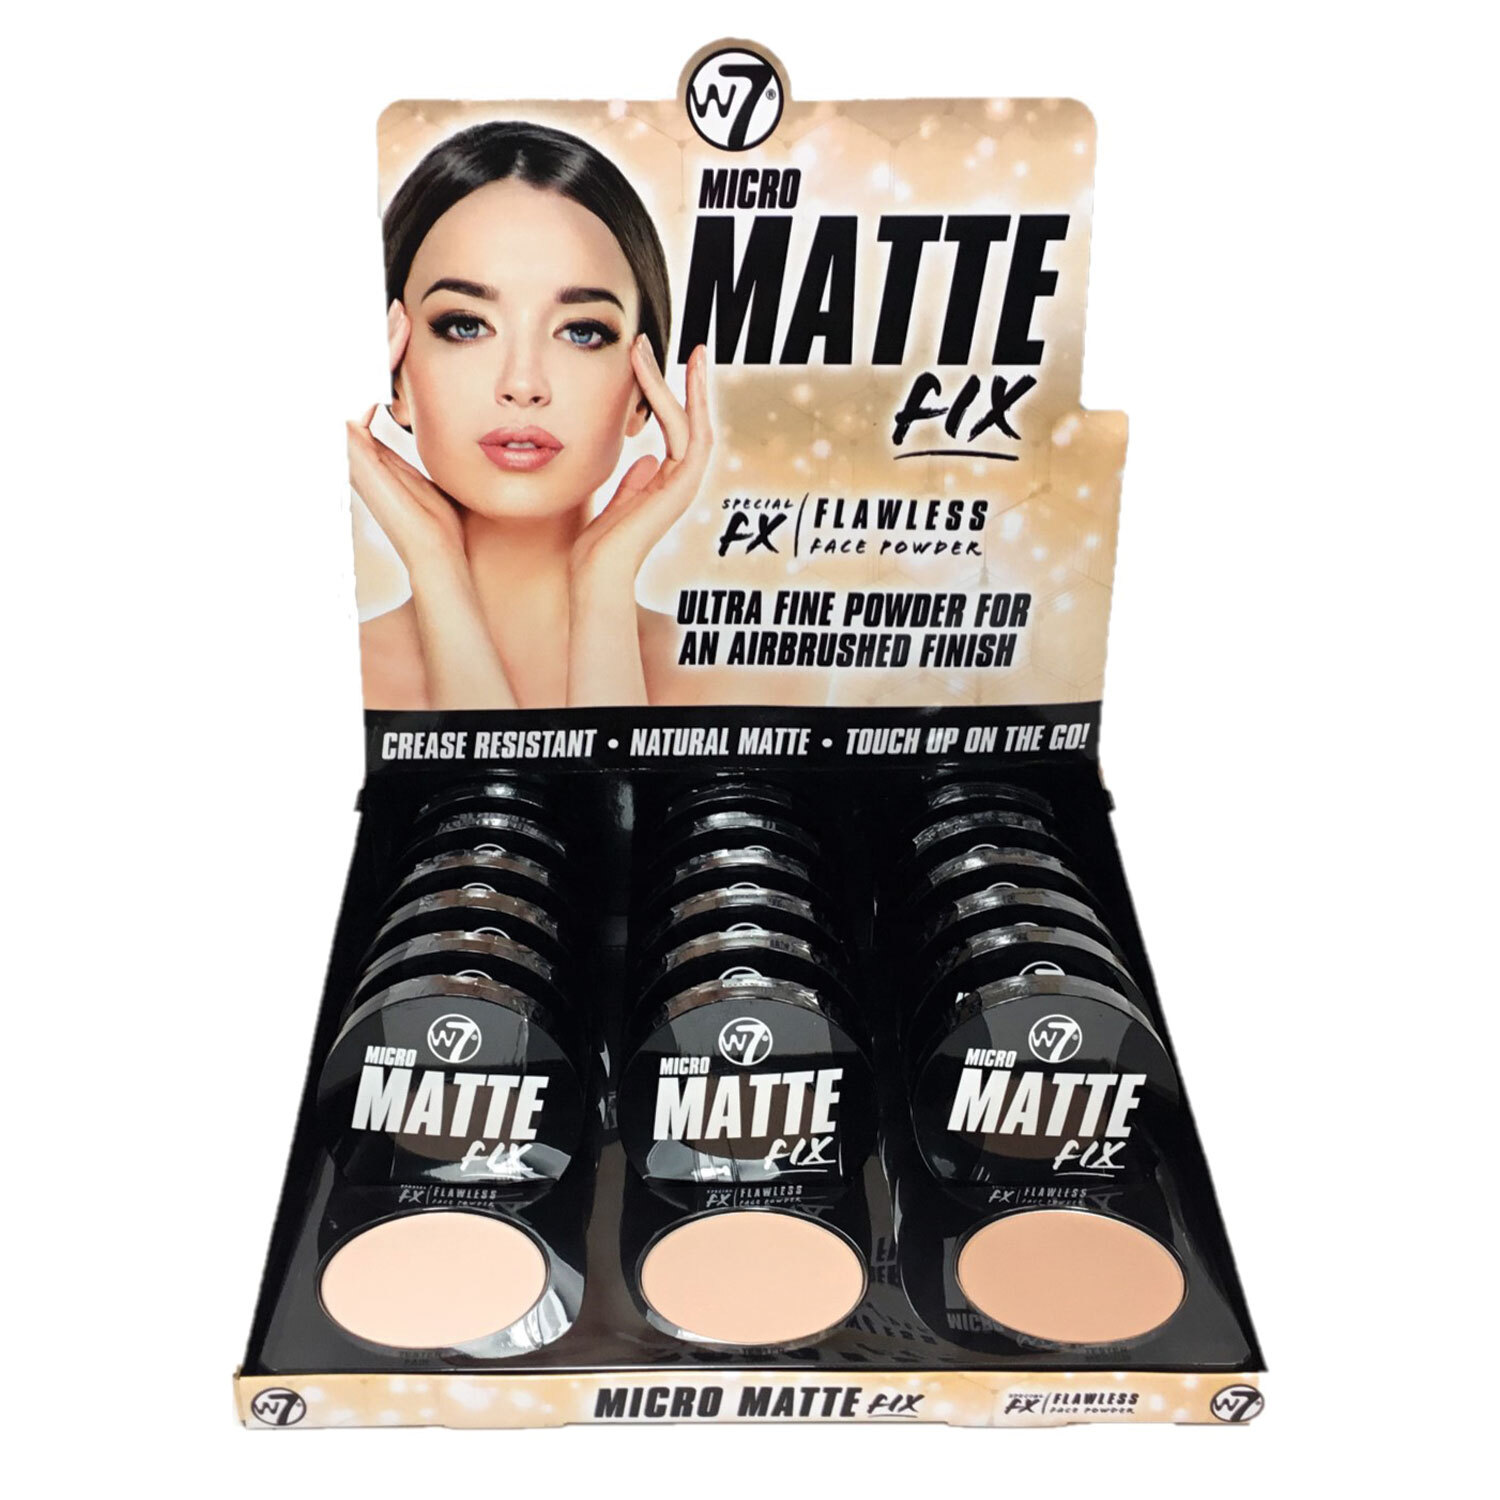 W7 Micro Matte Fix Flawless Face Powder Image